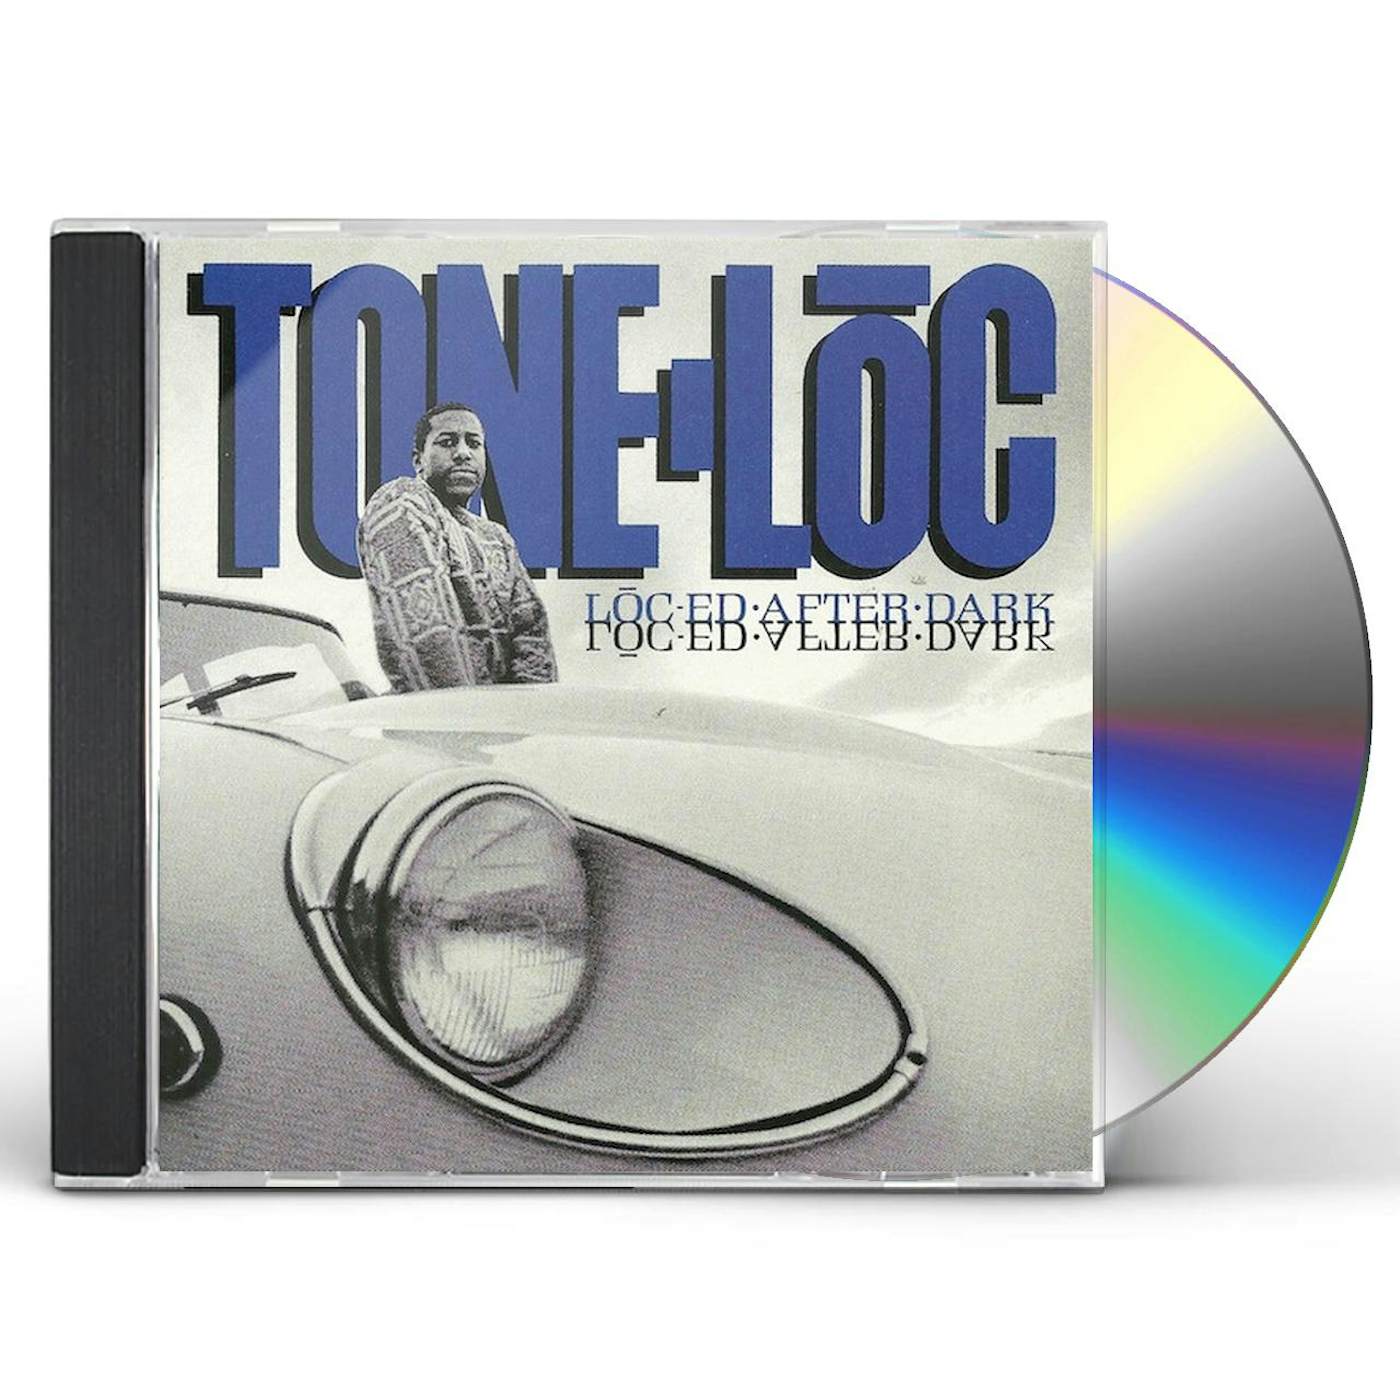 Tone-Loc LOC ED AFTER DARK CD